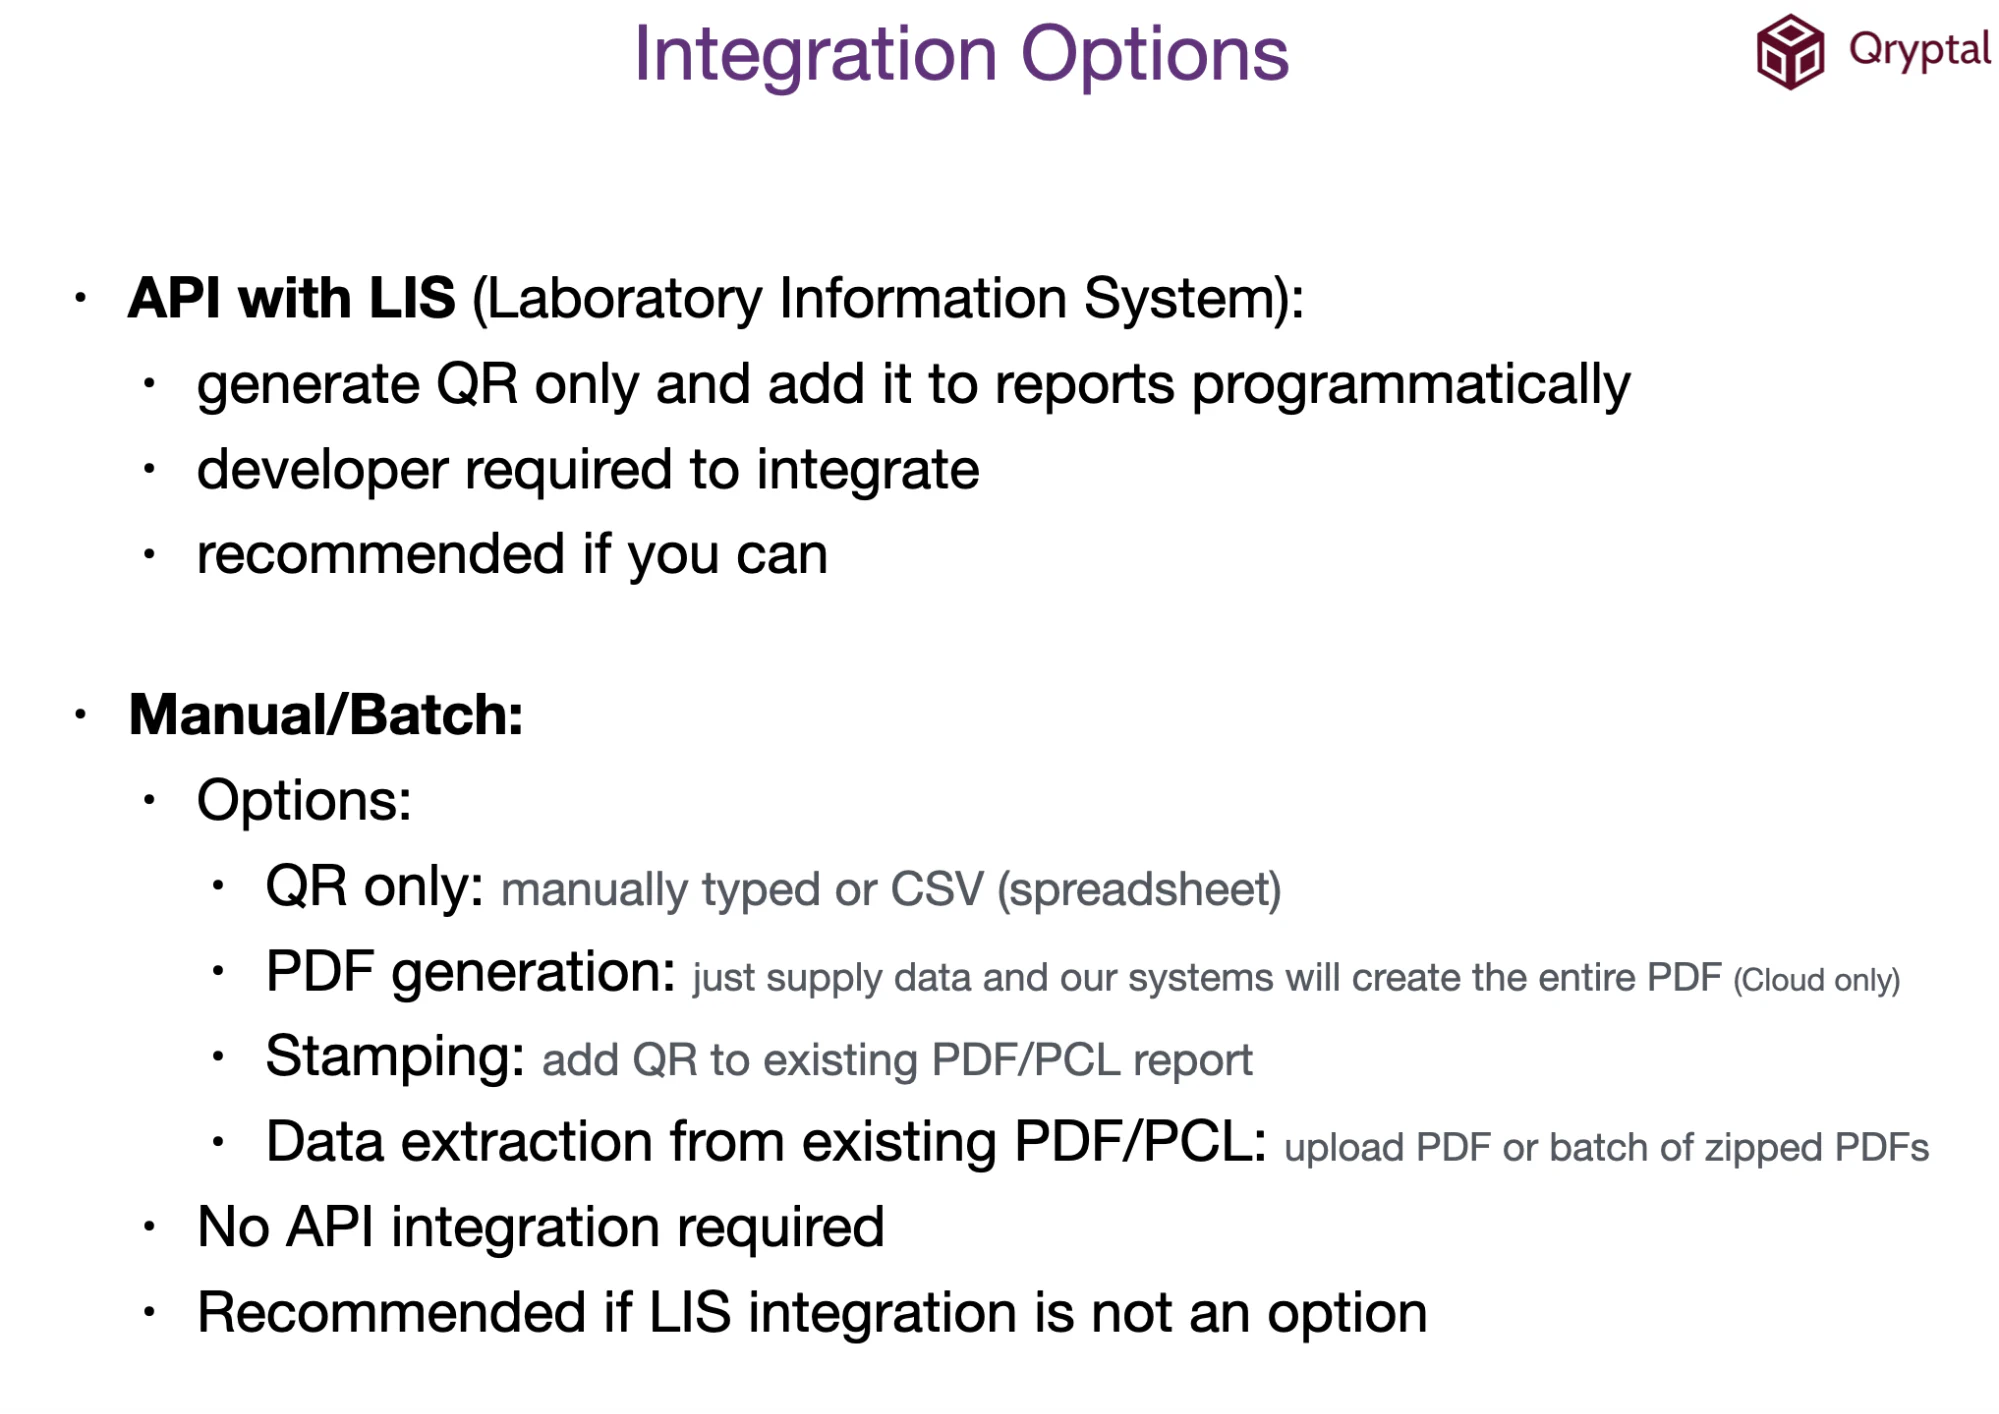 Options for Integration